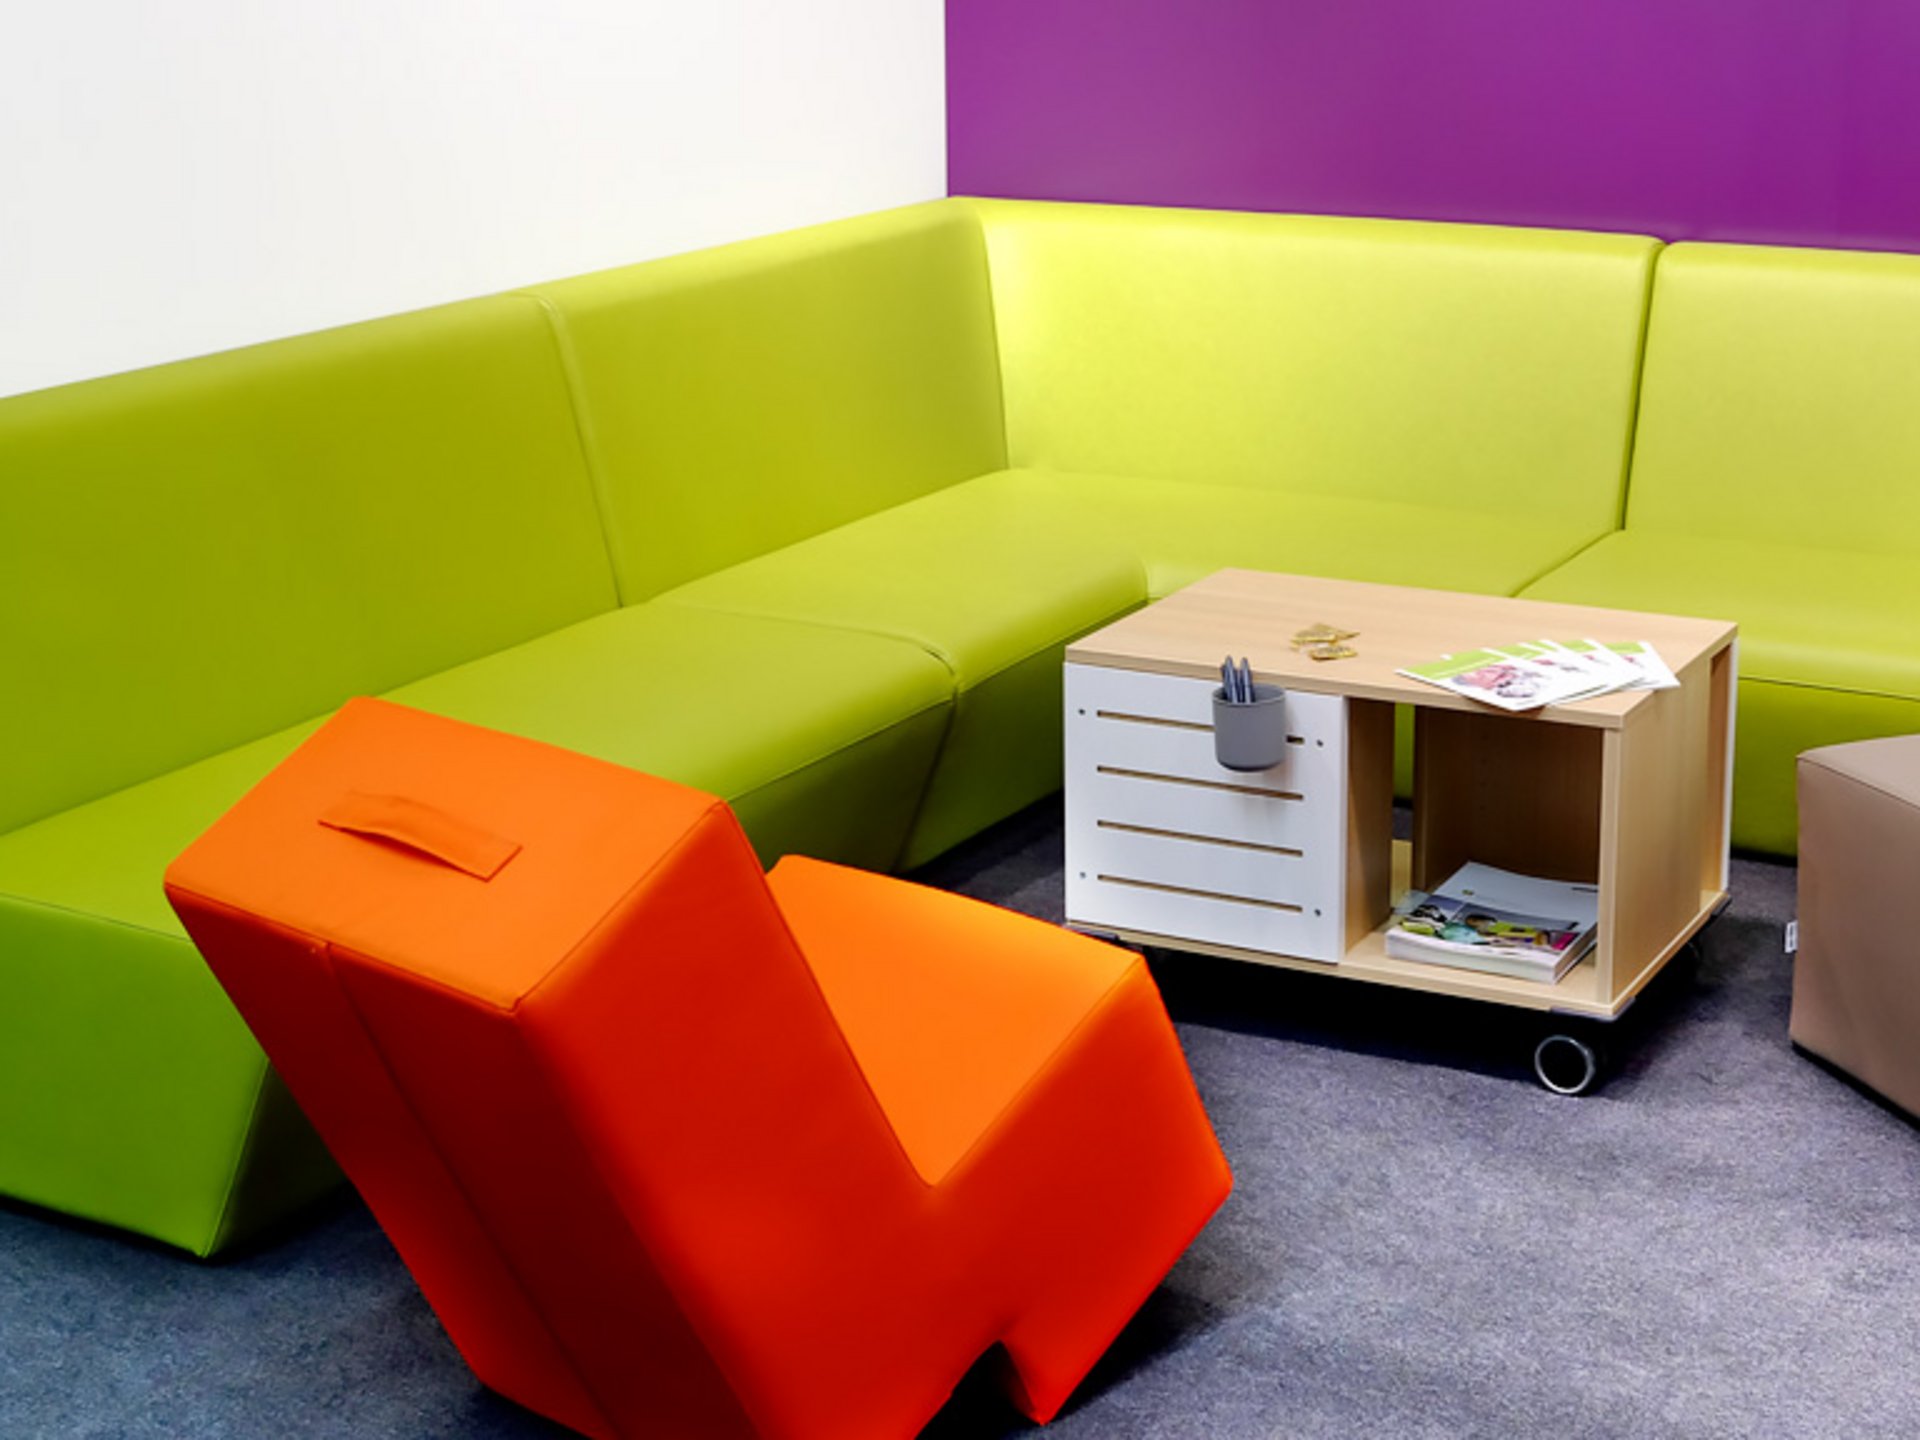 Image: Colourful atrificial leather seating furniture